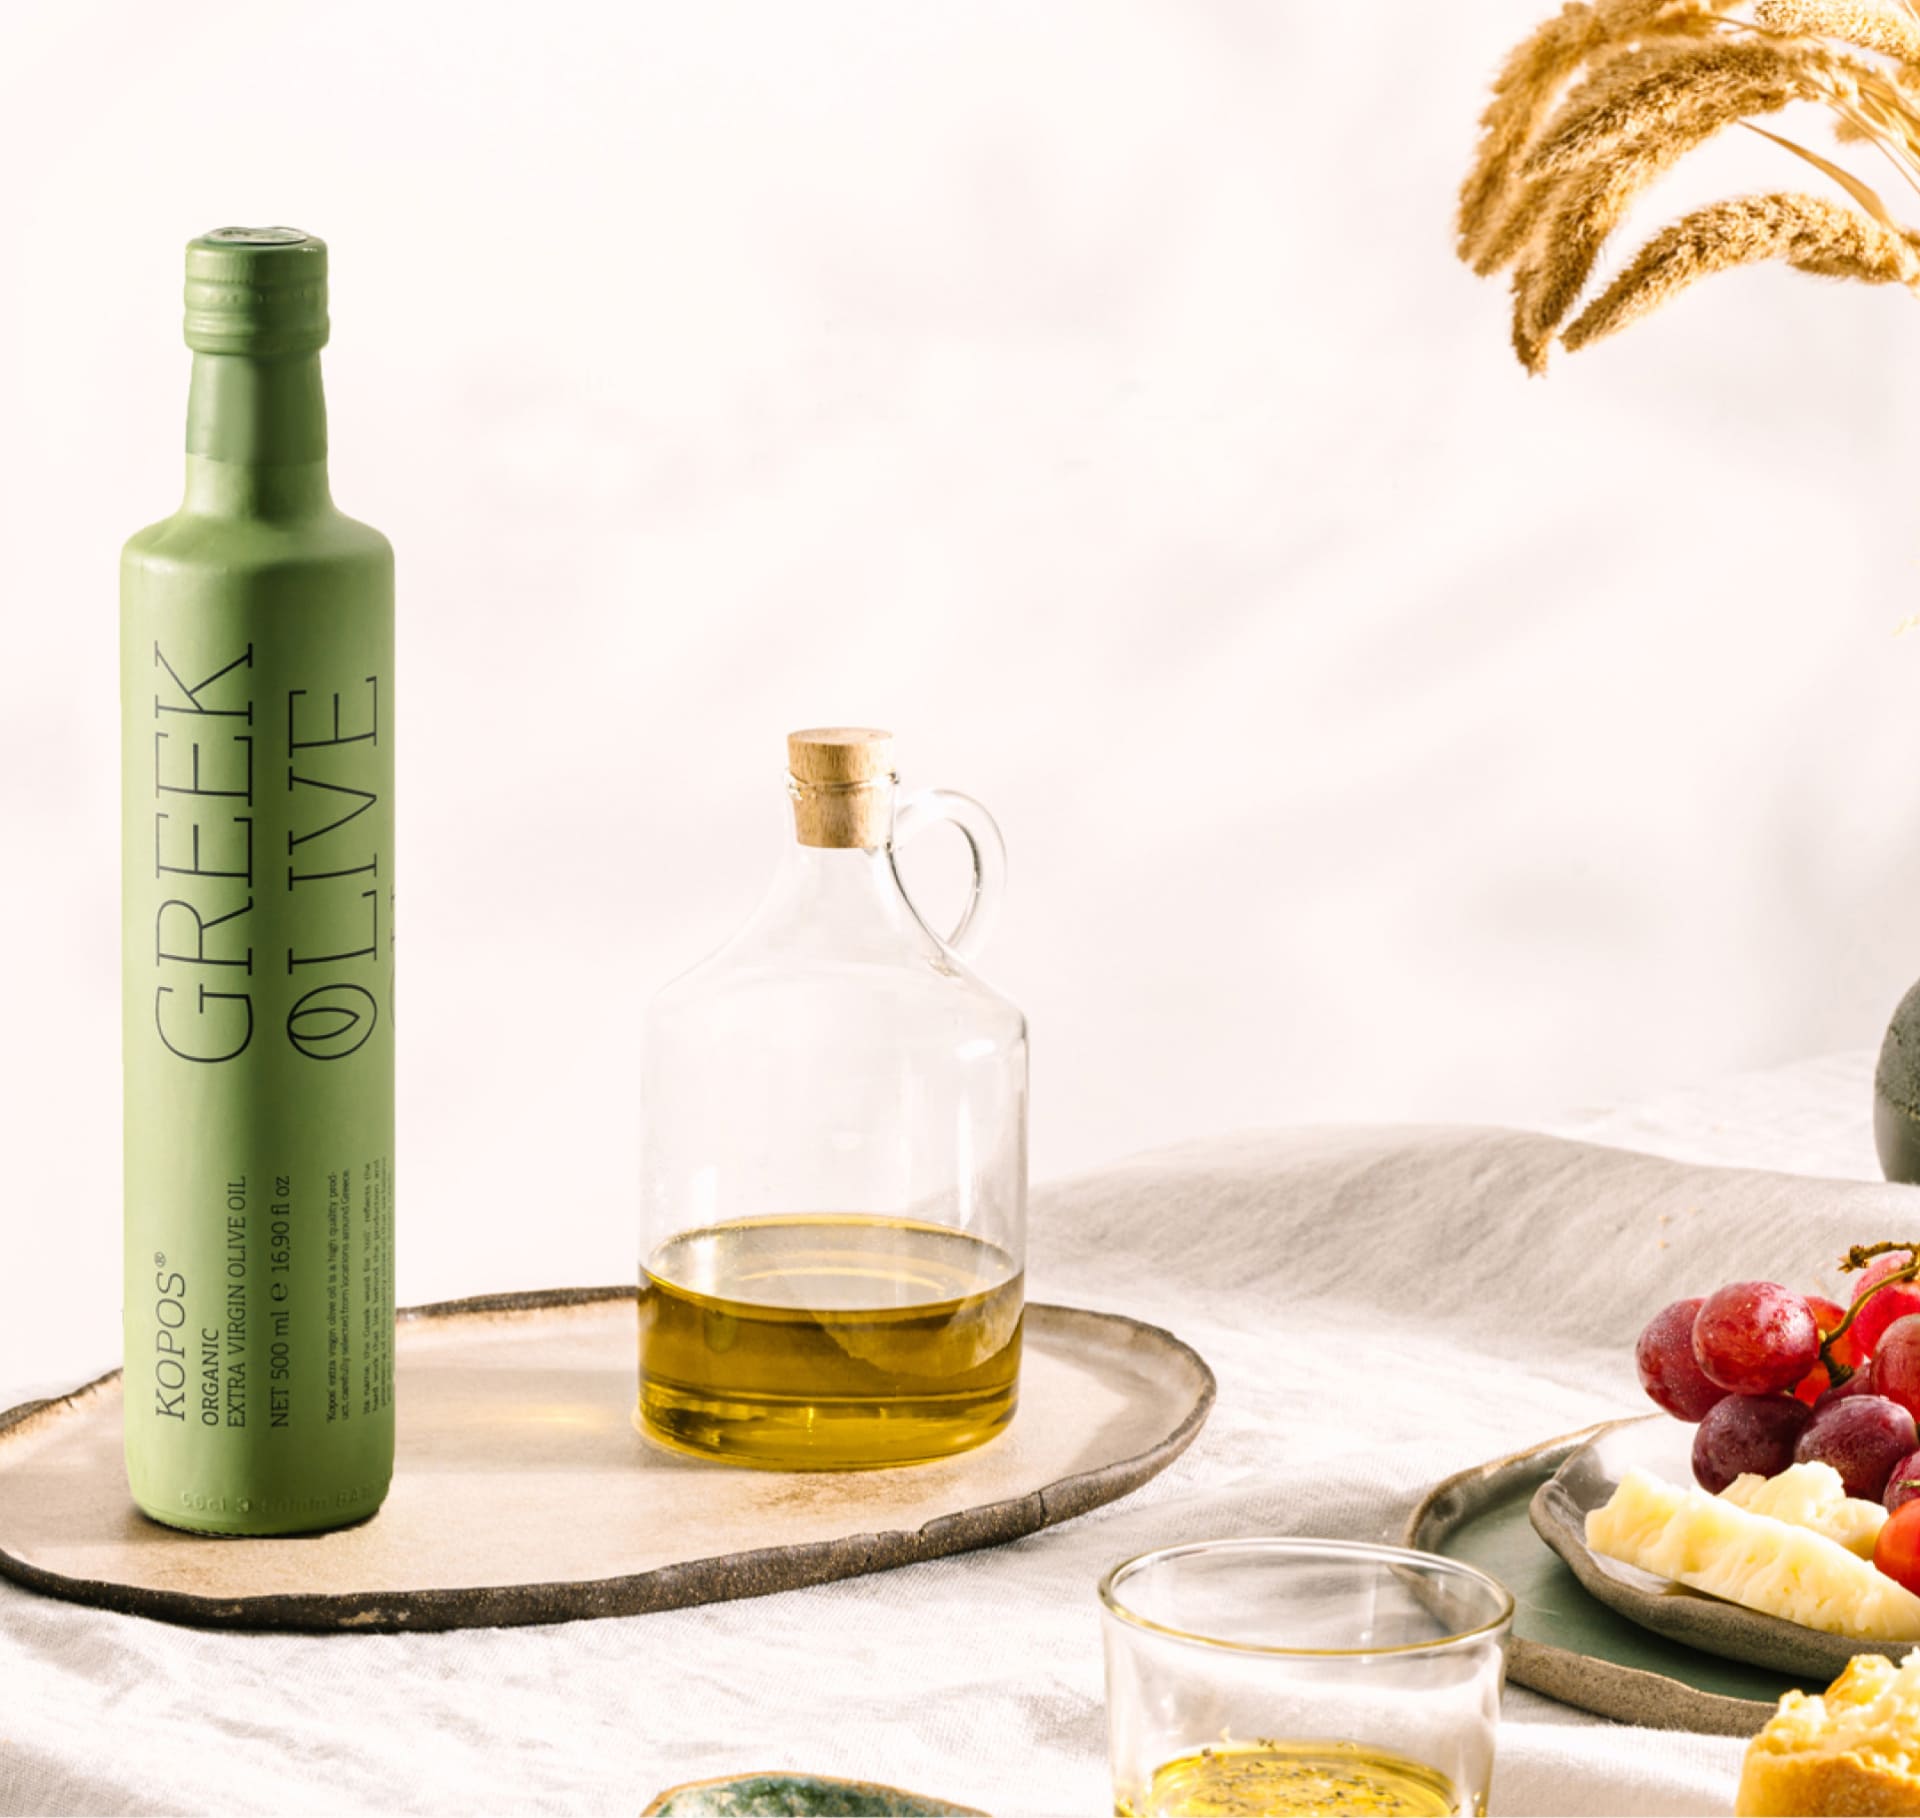 andriotis olive oil blog | Απολαύστε την απόλυτη εμπειρία ελαιολάδου!